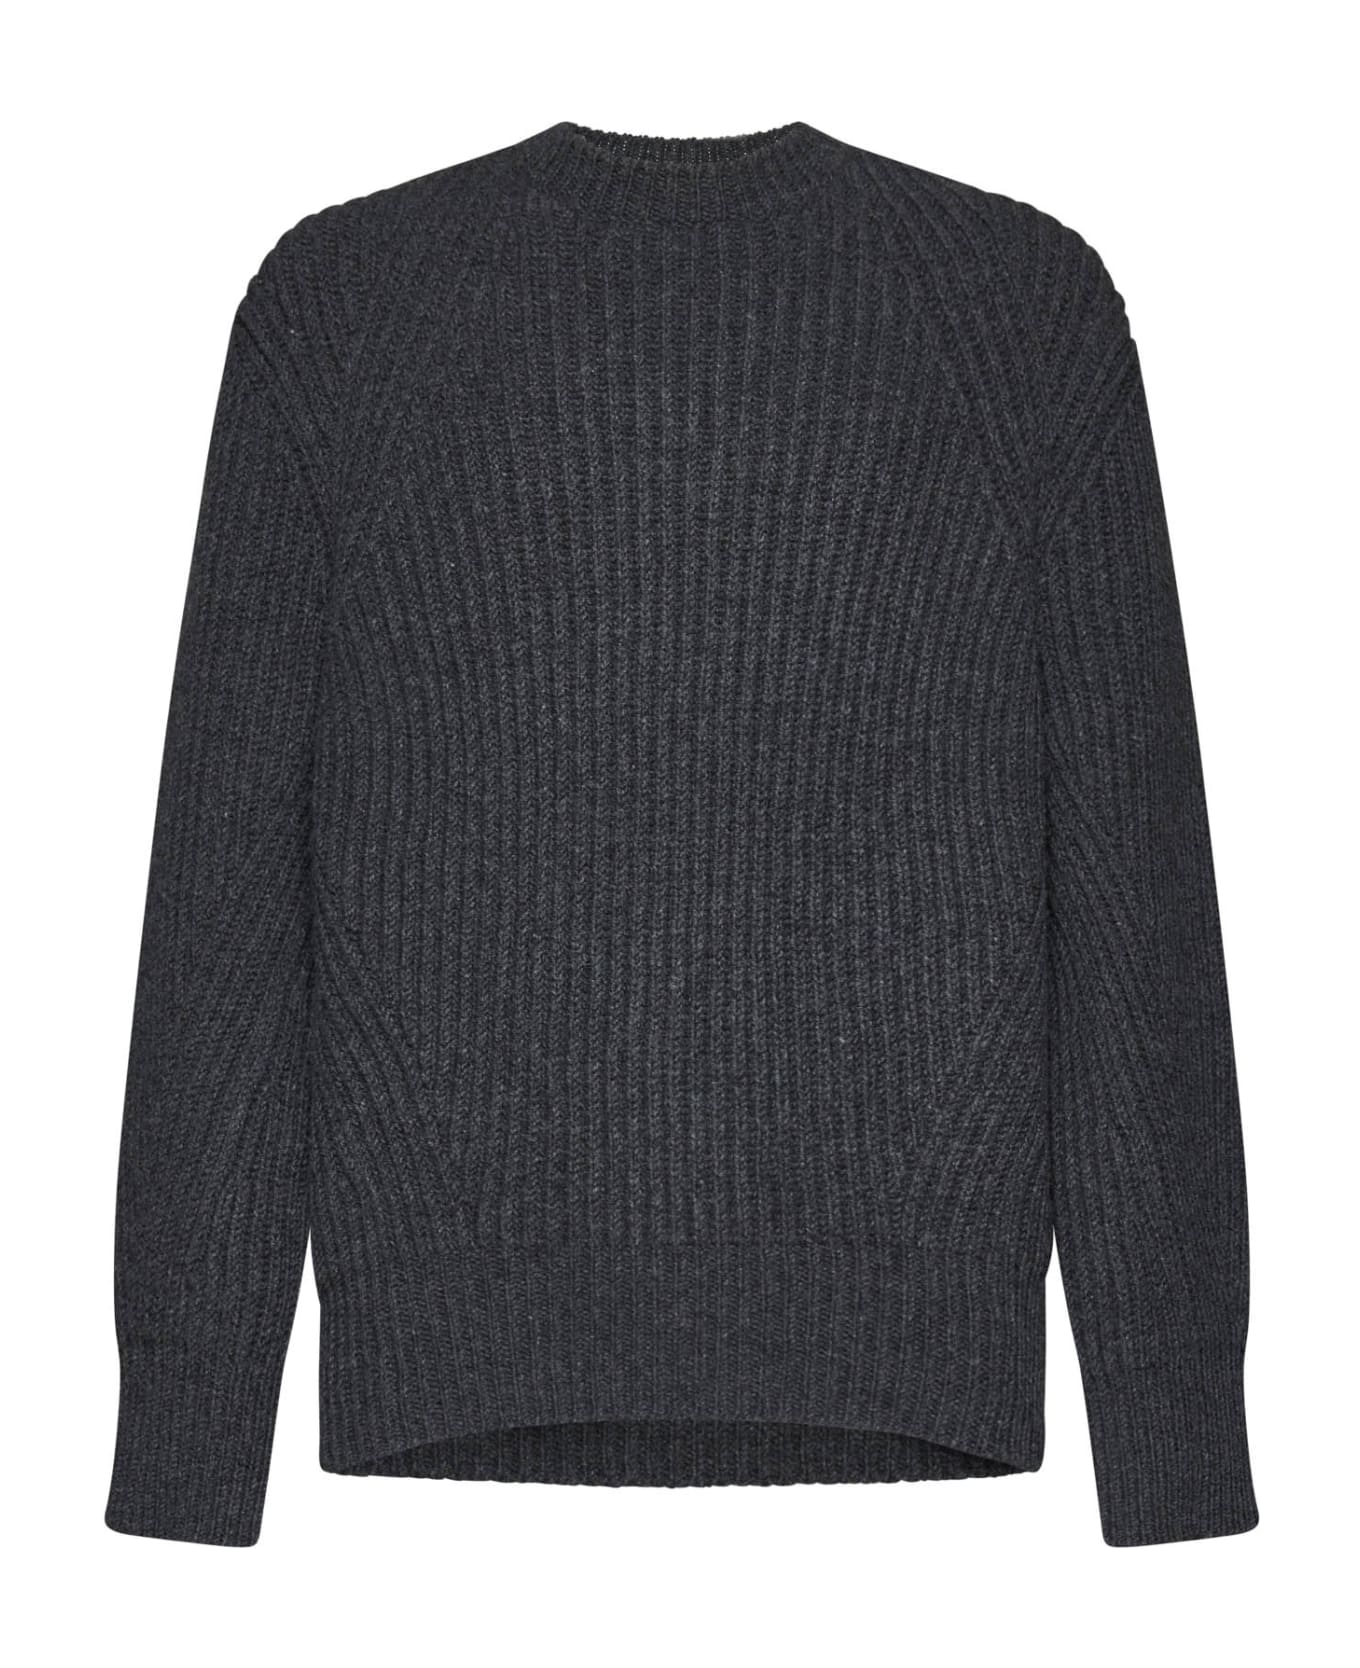 Alexander McQueen Crewneck Rib Knit Sweater - Charcoal